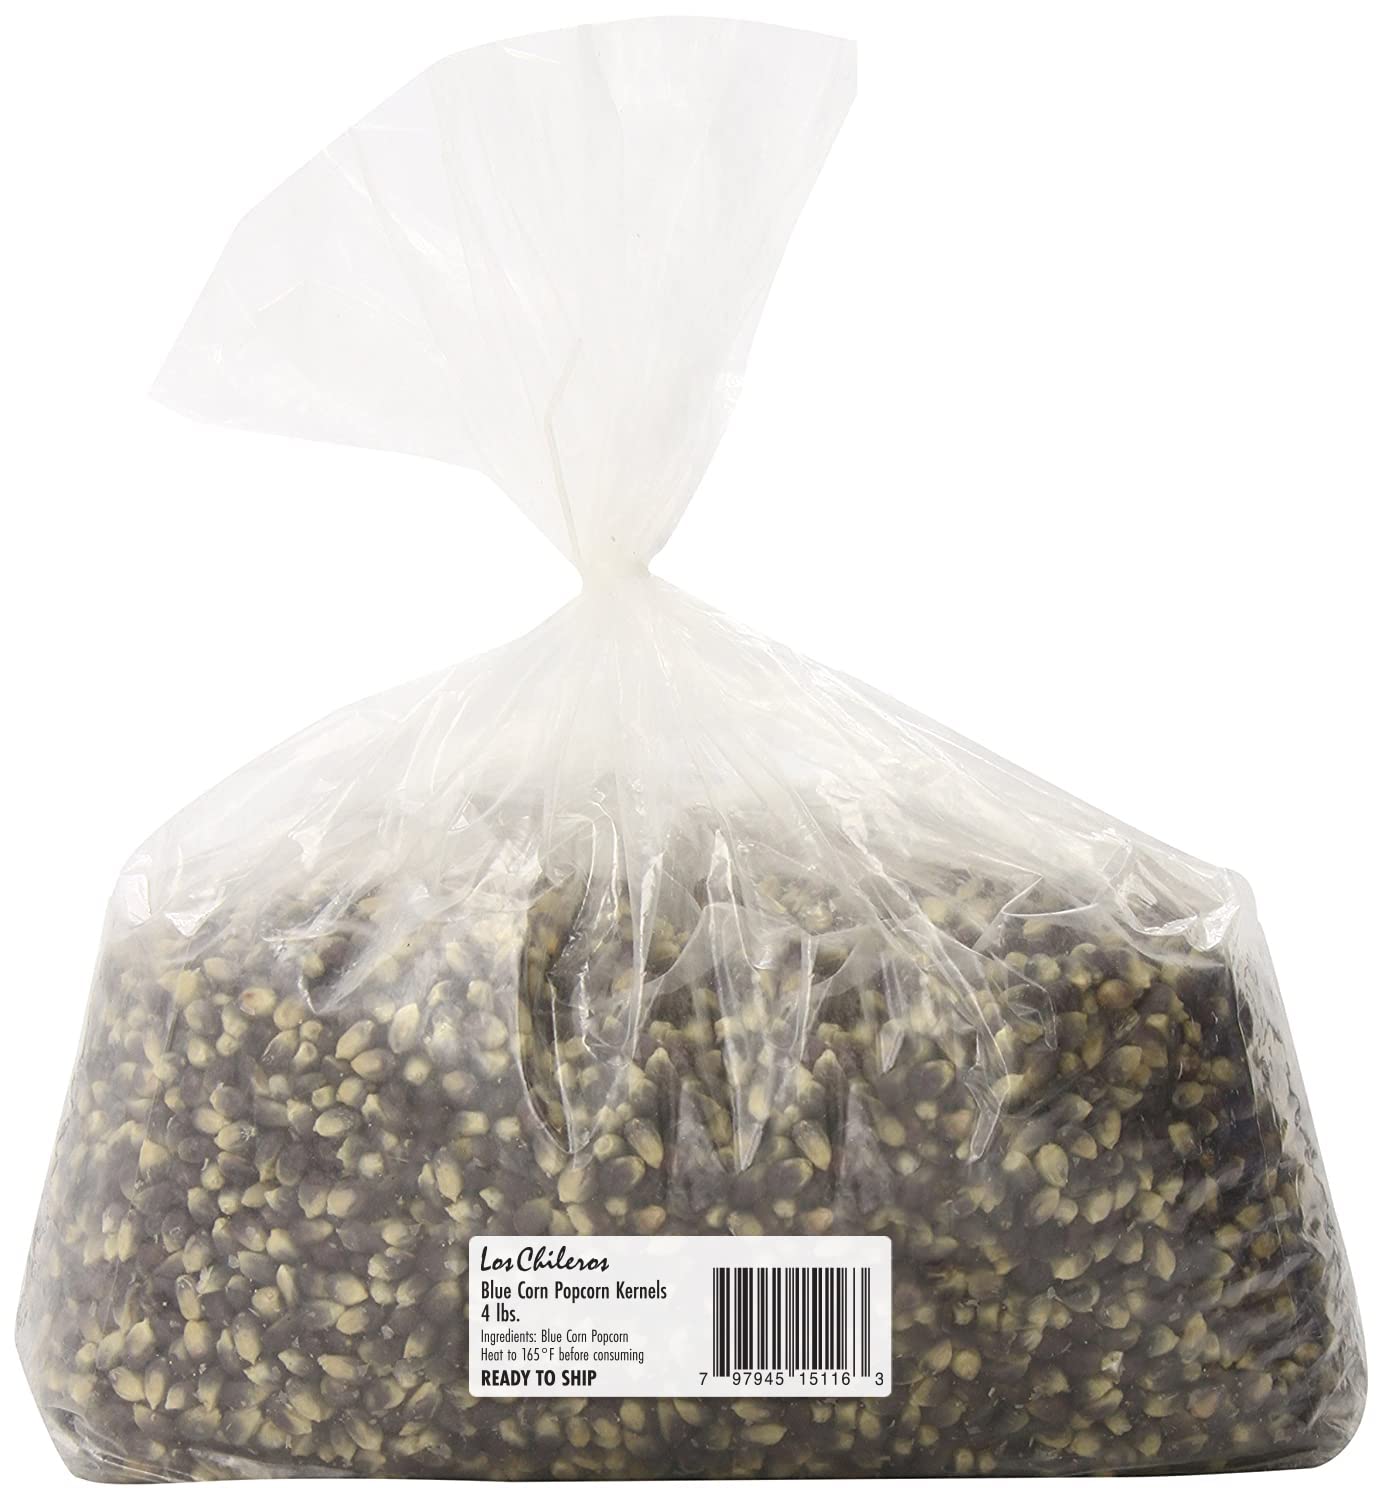 Los Chileros Blue Corn Popcorn Kernel 4lb bulk bag